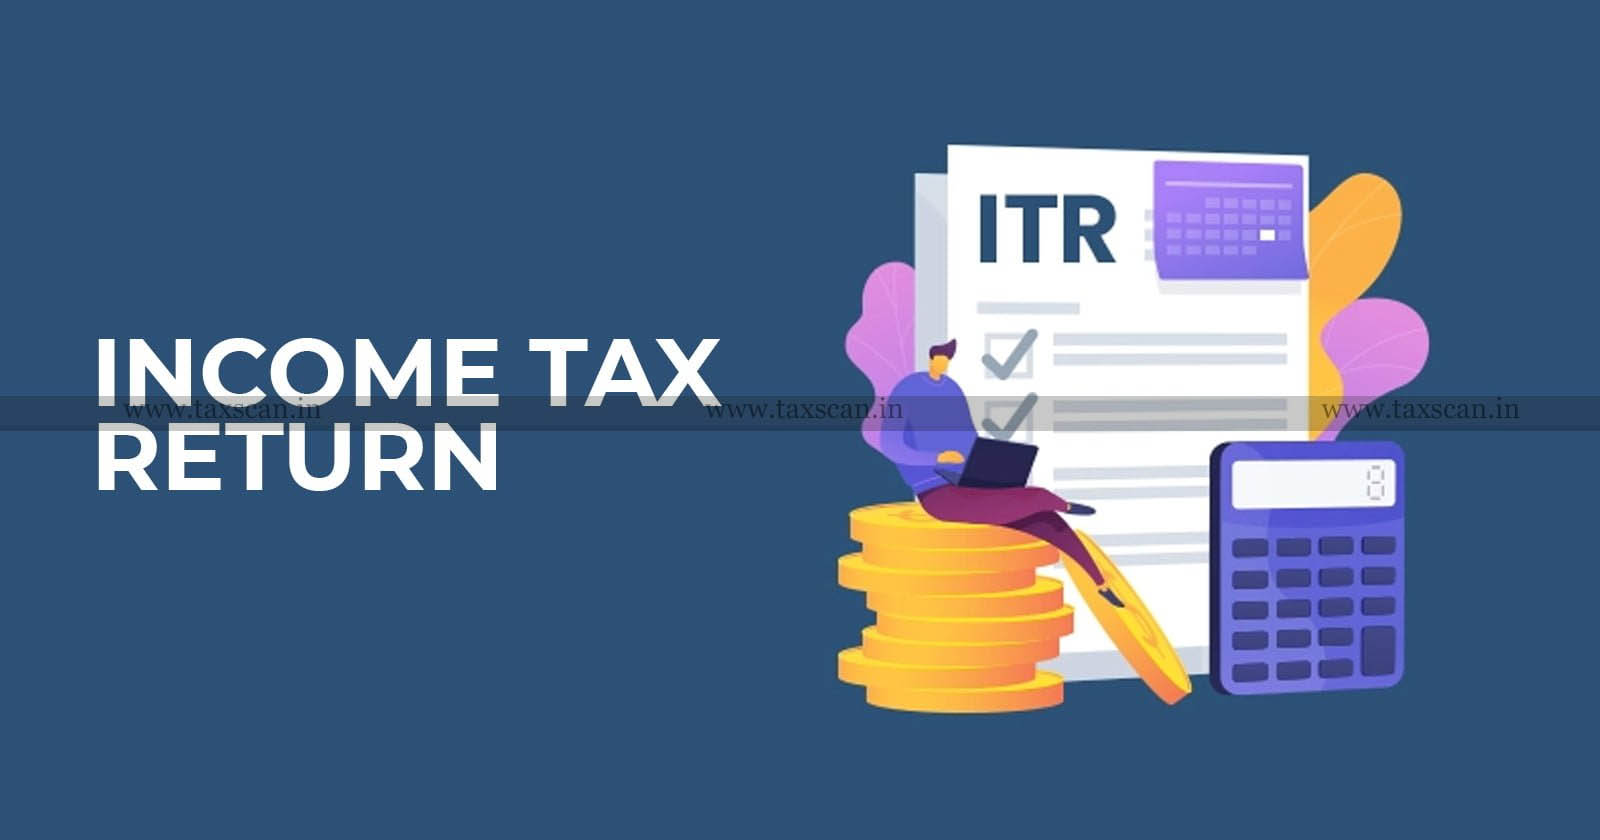 Income Tax Act - Income Tax Return - quash - Income - Concealment - Filing - Proceedings Tax Return - TAXSCAN